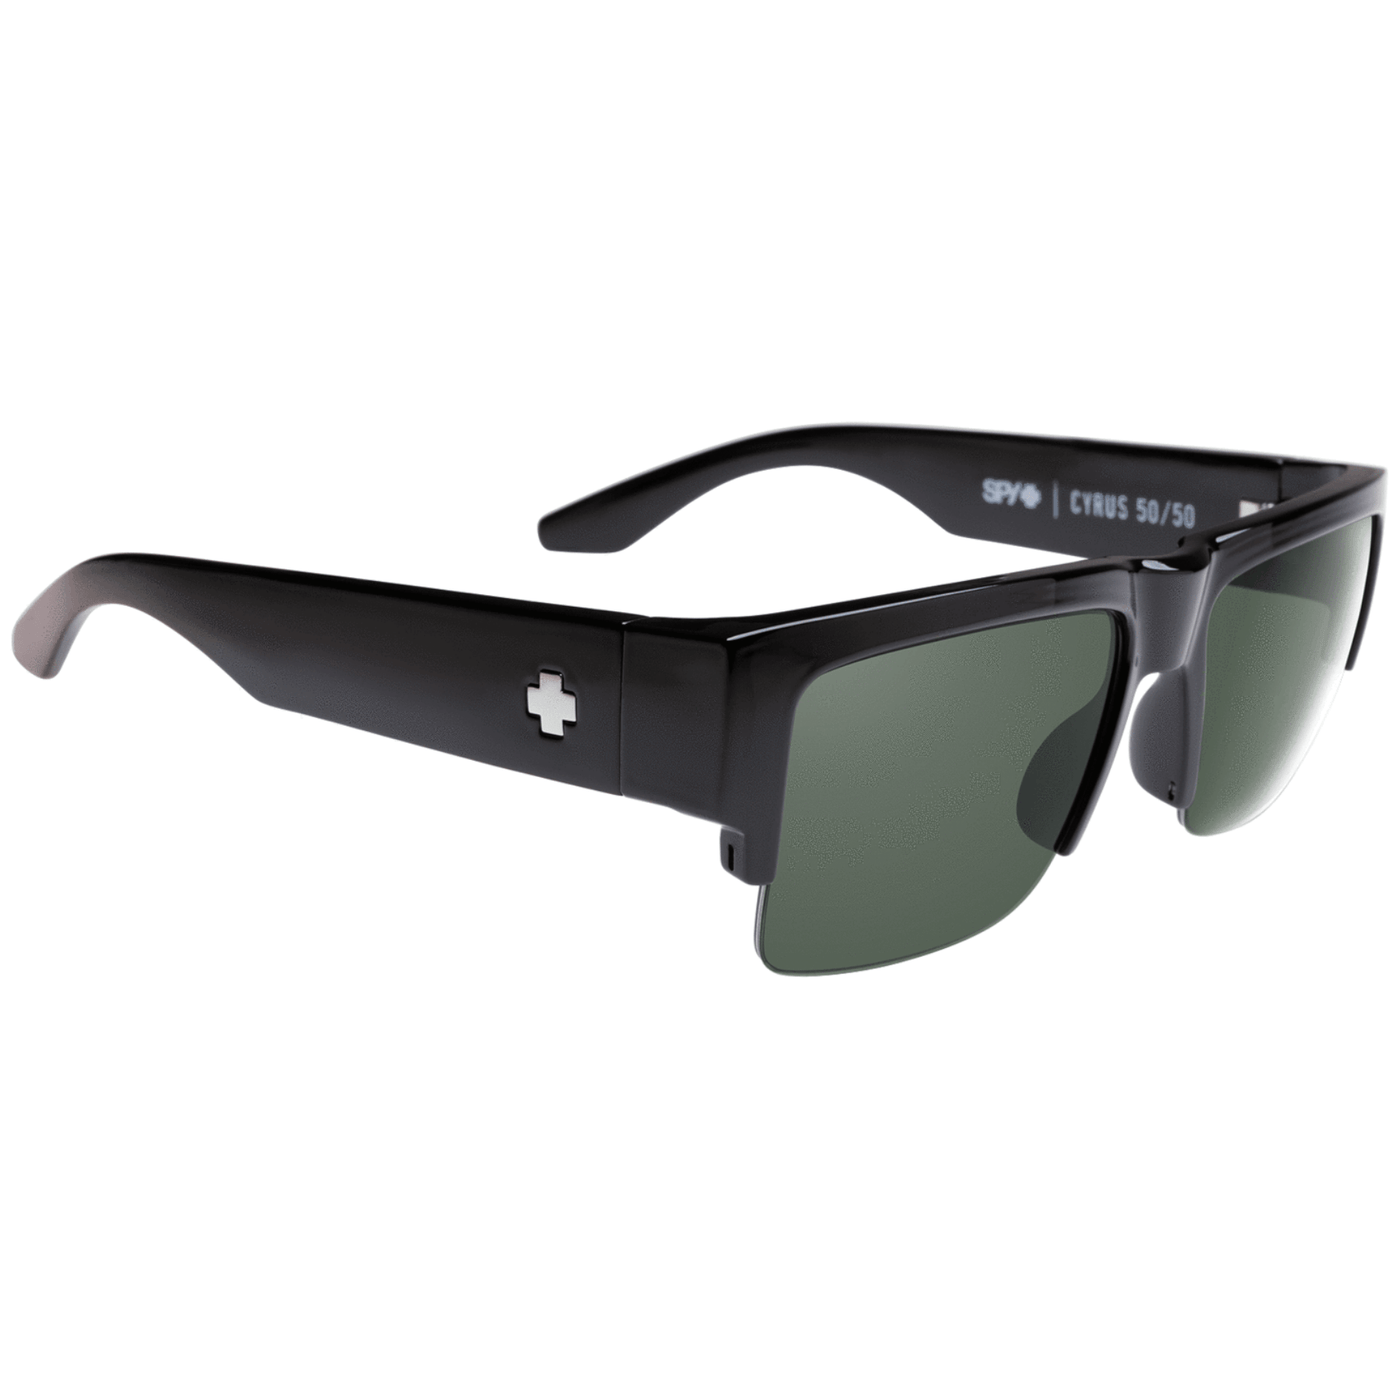 black SPY cyrus 5050 sunglasses